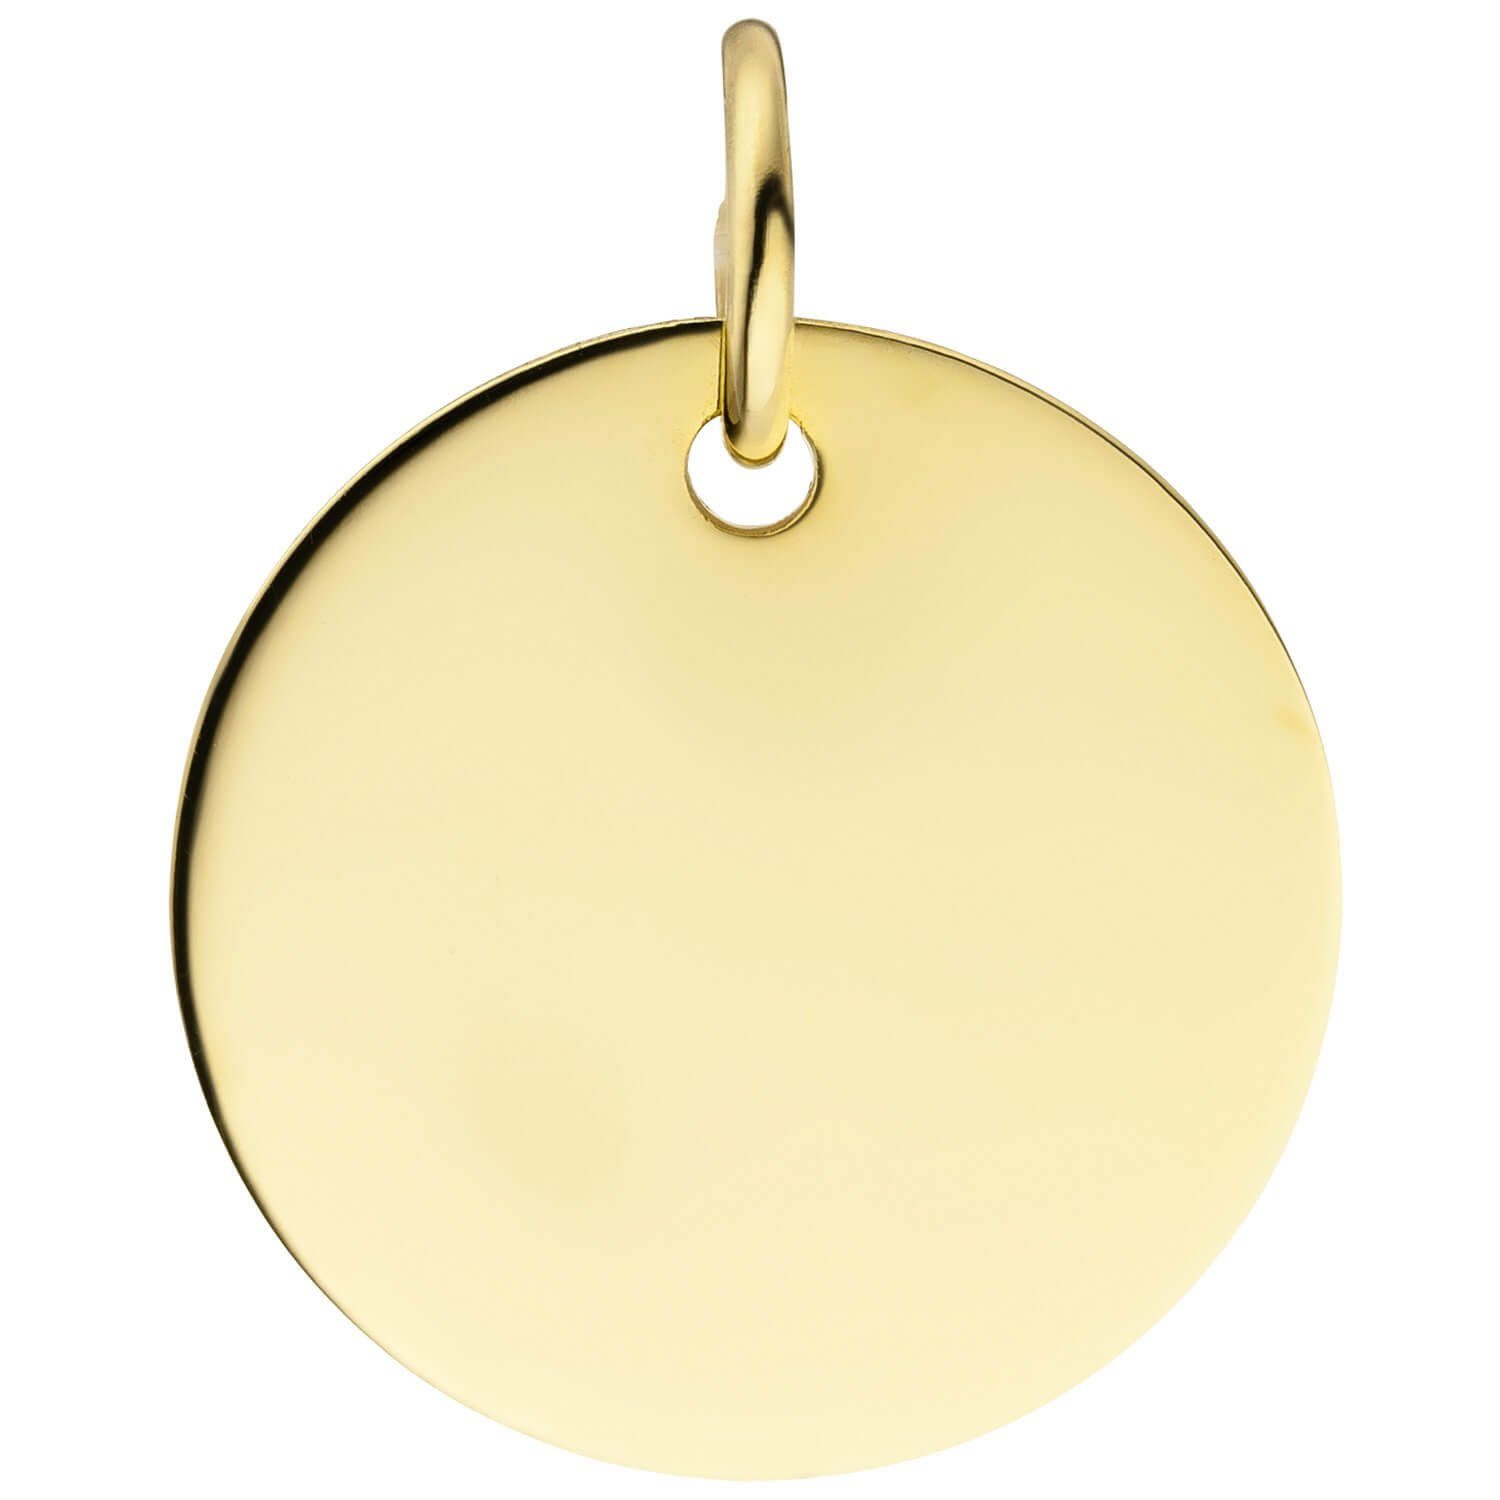 Schmuck Krone Kettenanhänger Anhänger Kreis 585 Gravur 14mm aus Gold 585 Gravurplatte Gelbgold, Goldanhänger Gold